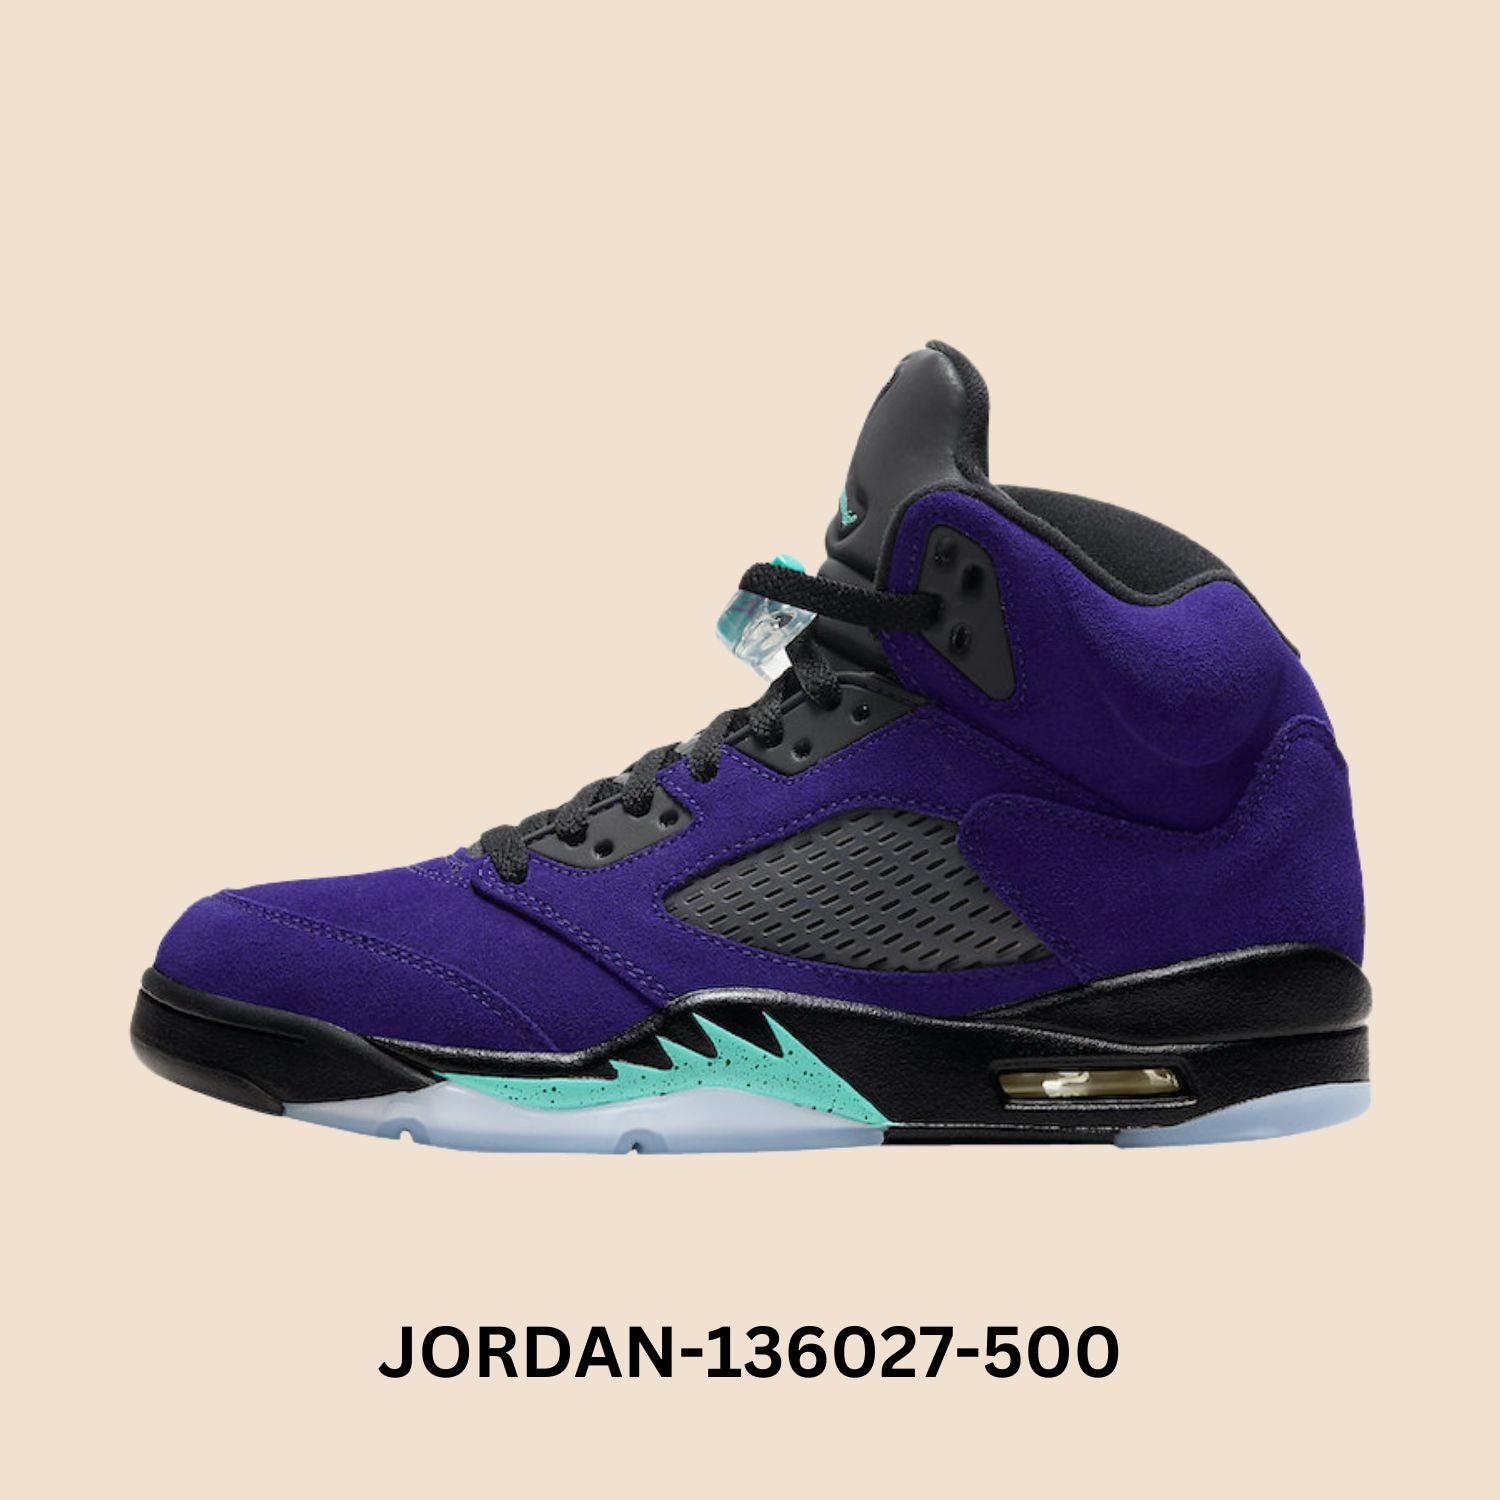 Air Jordan 5 Retro "Alternate Grape" Men's Style# 136027-500